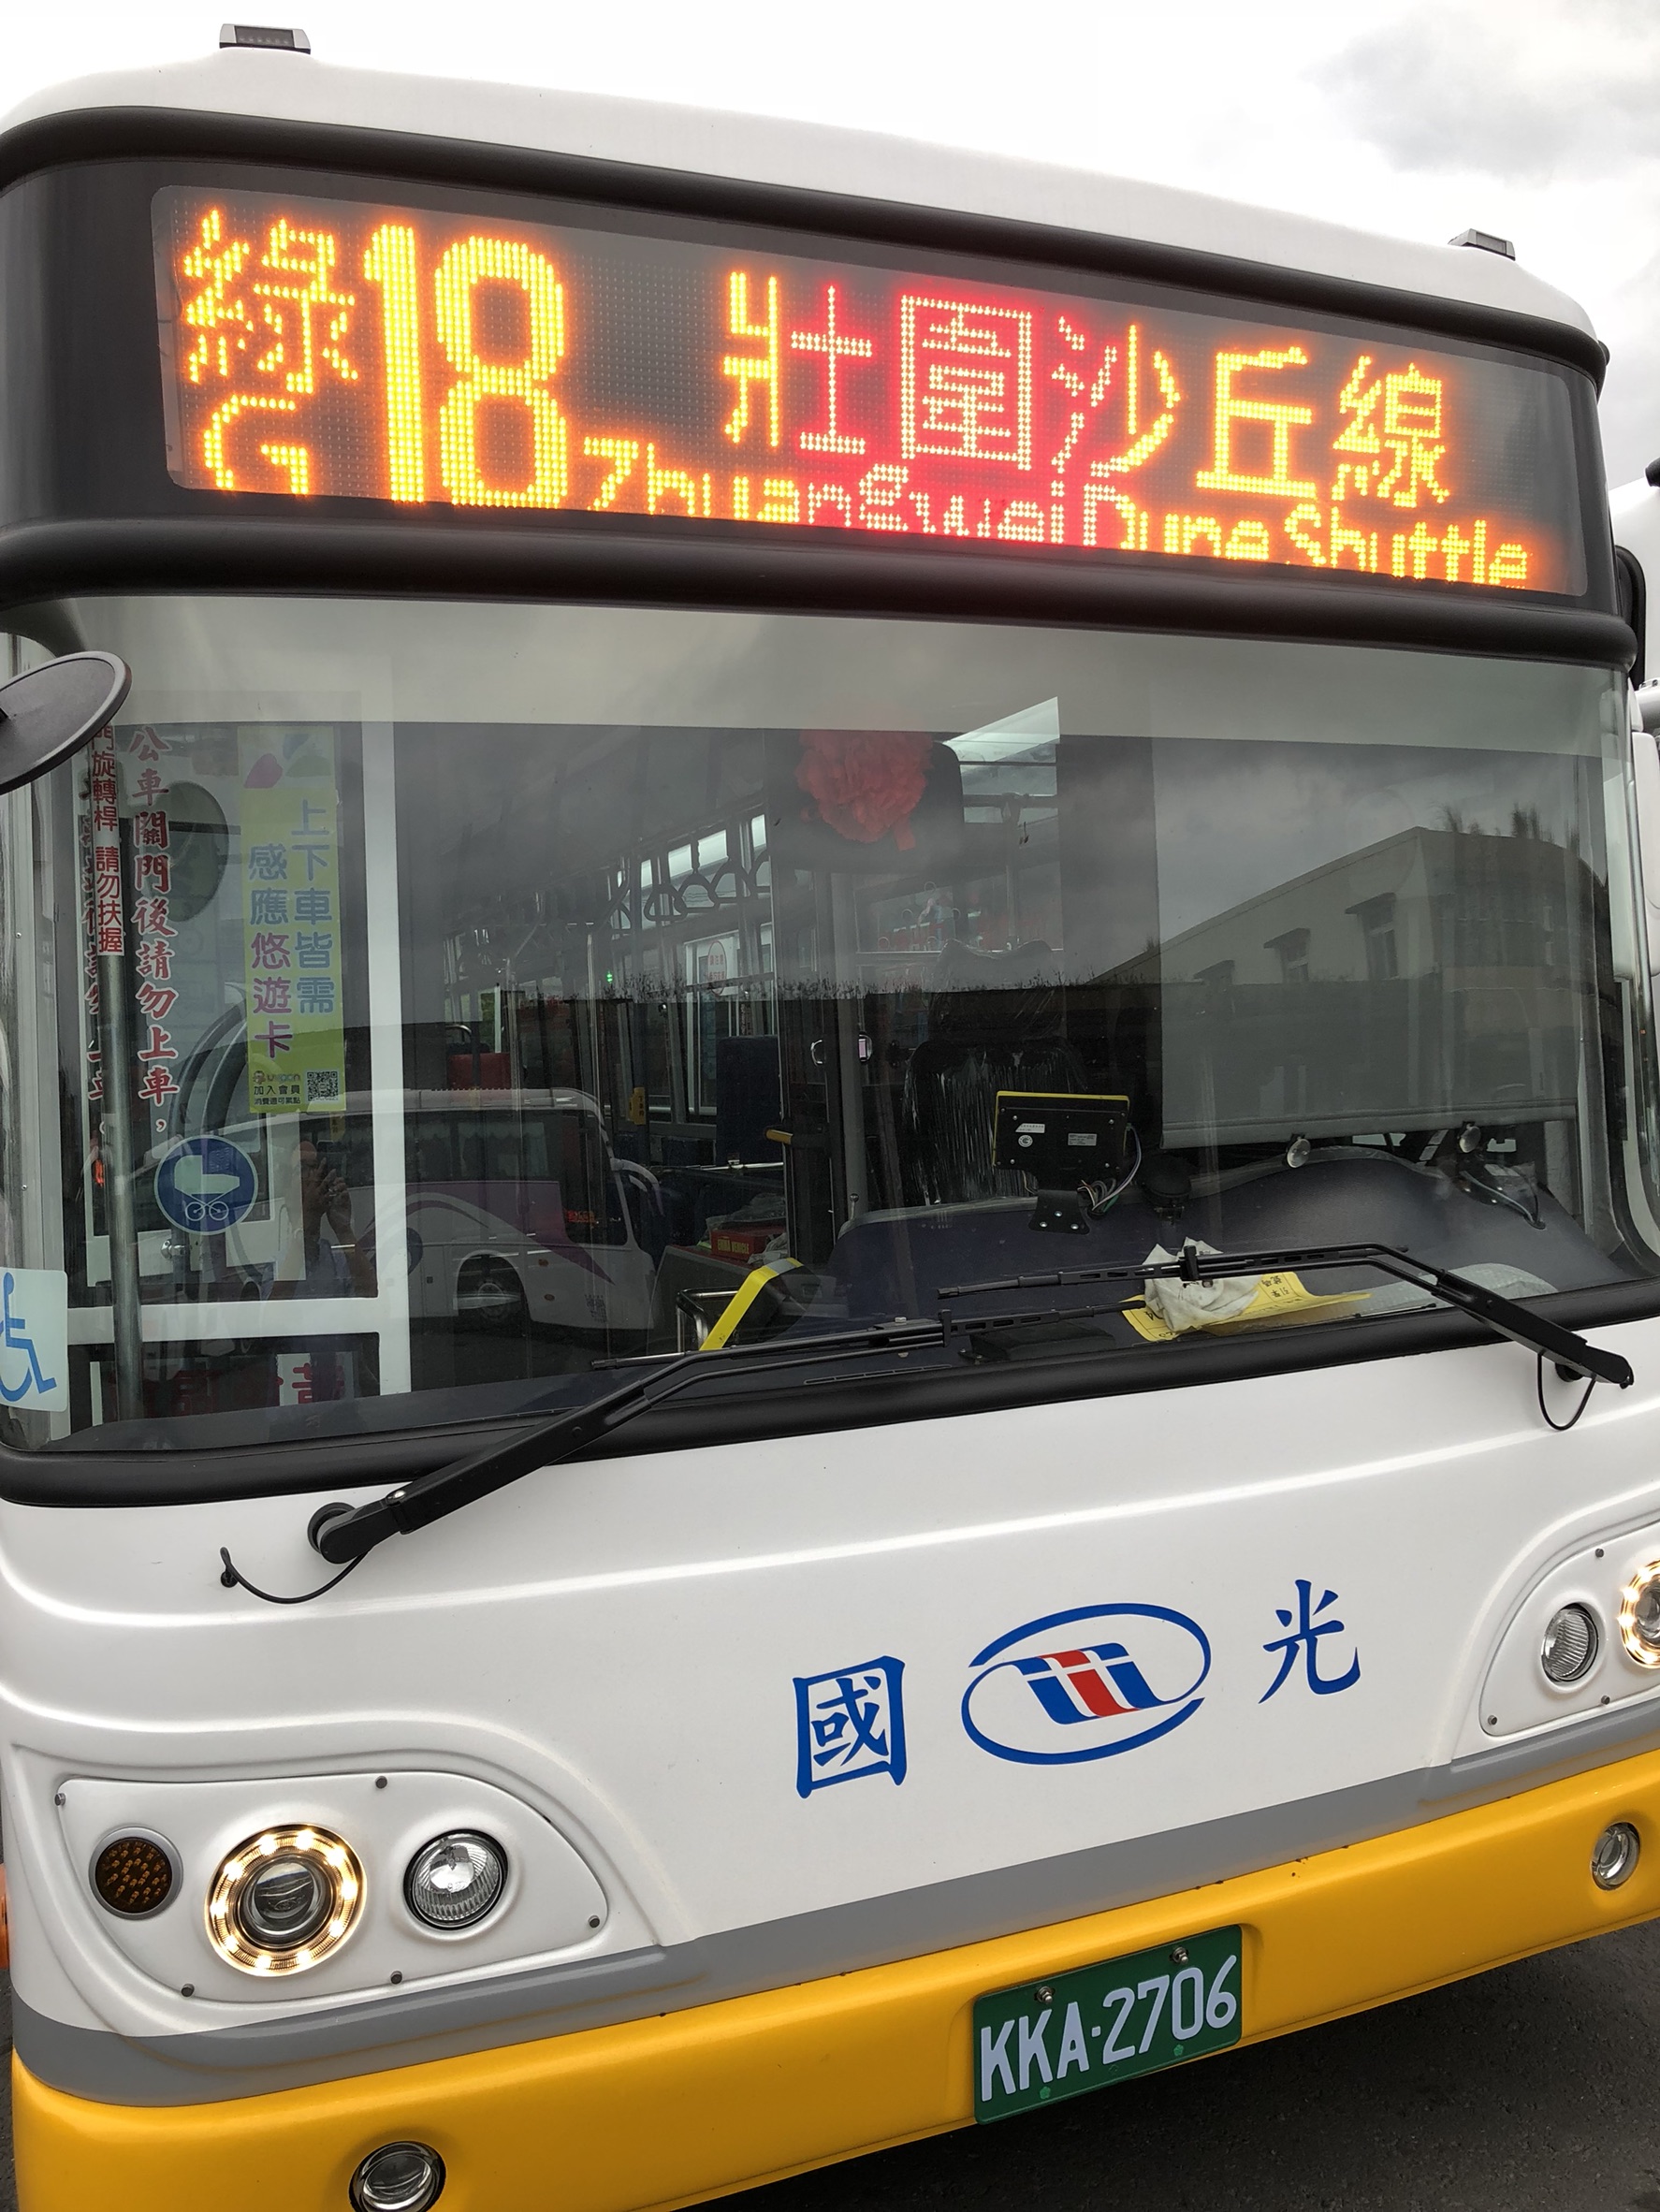 10 new low-floor bus roads in Zhuangwei Dune Line (1)